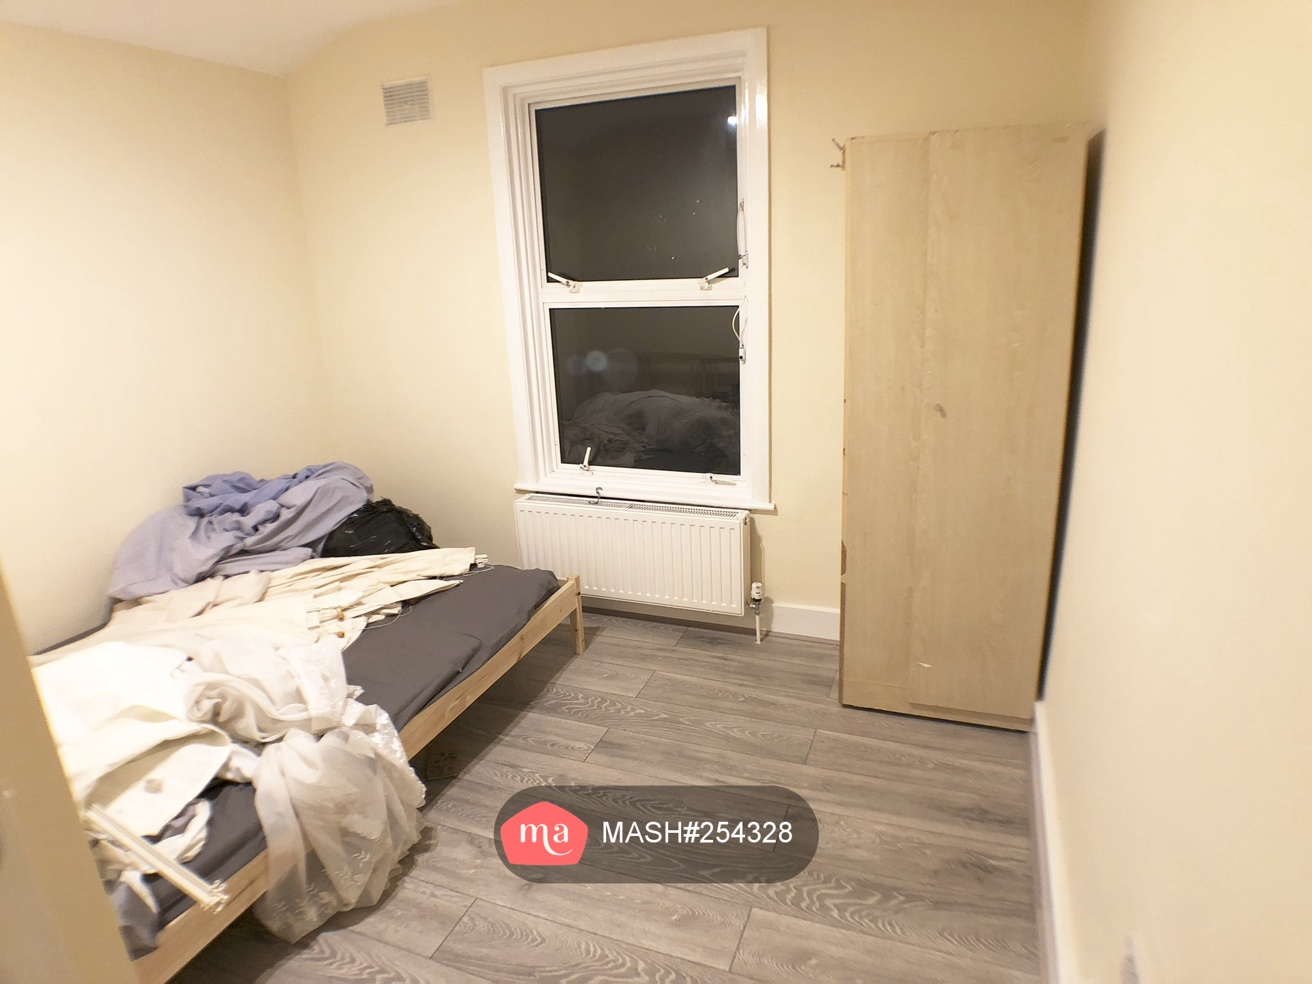 6 Bedroom Terraced to rent in Harrow - Mashroom